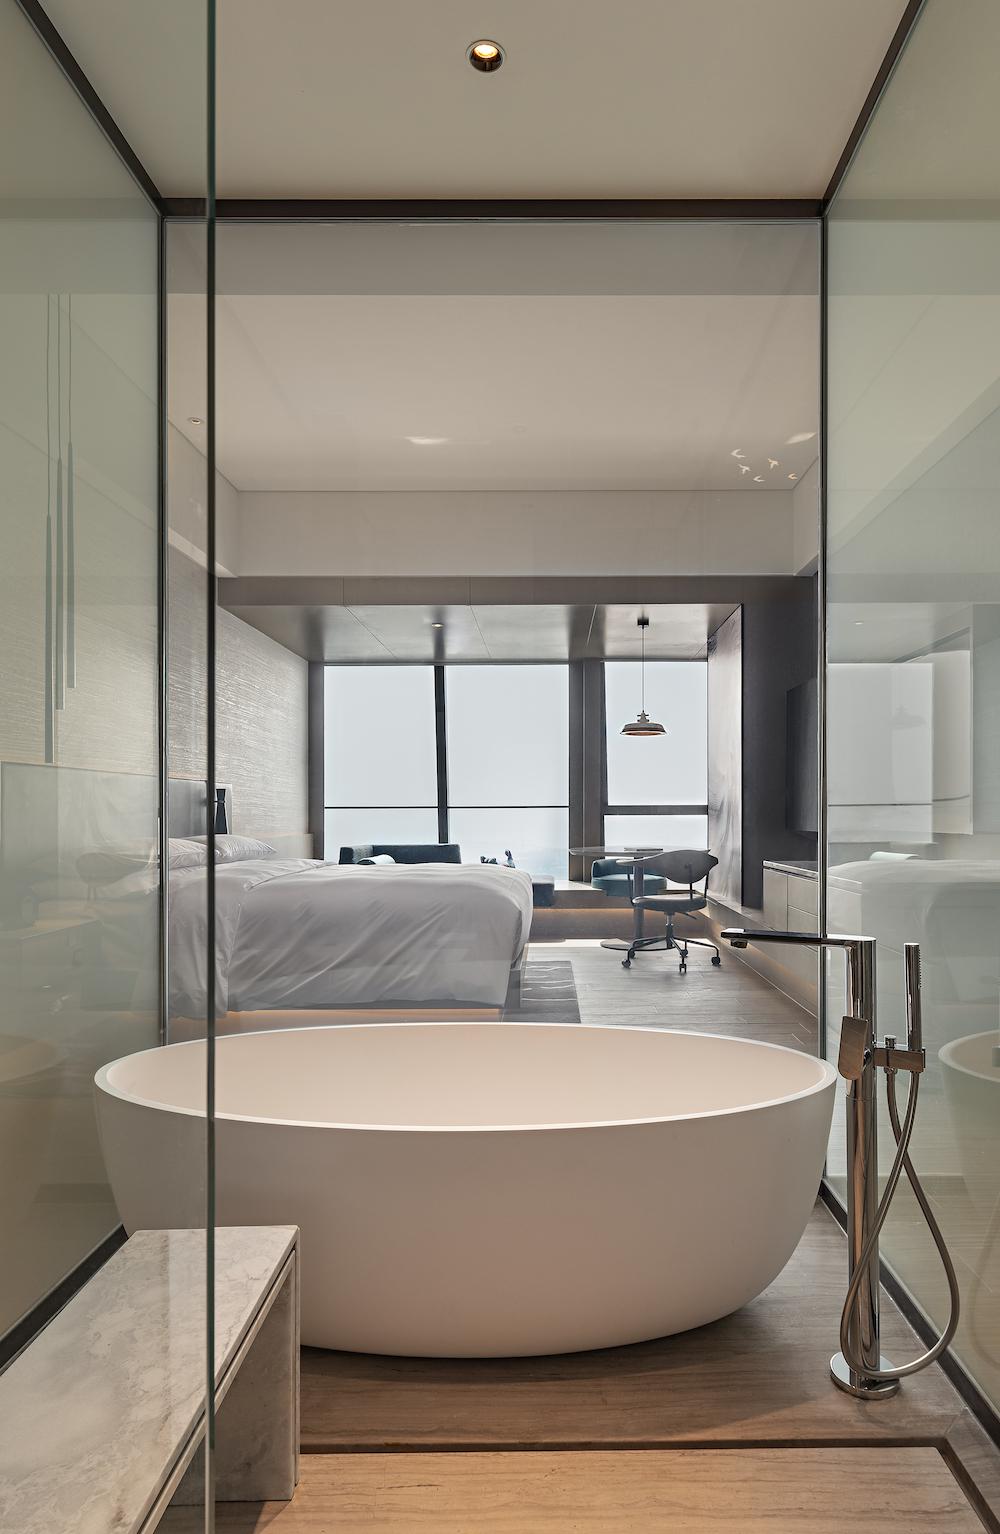 William Lim Talks Design: The Bathroom is No Longer Just a Necessity, But The Spotlight